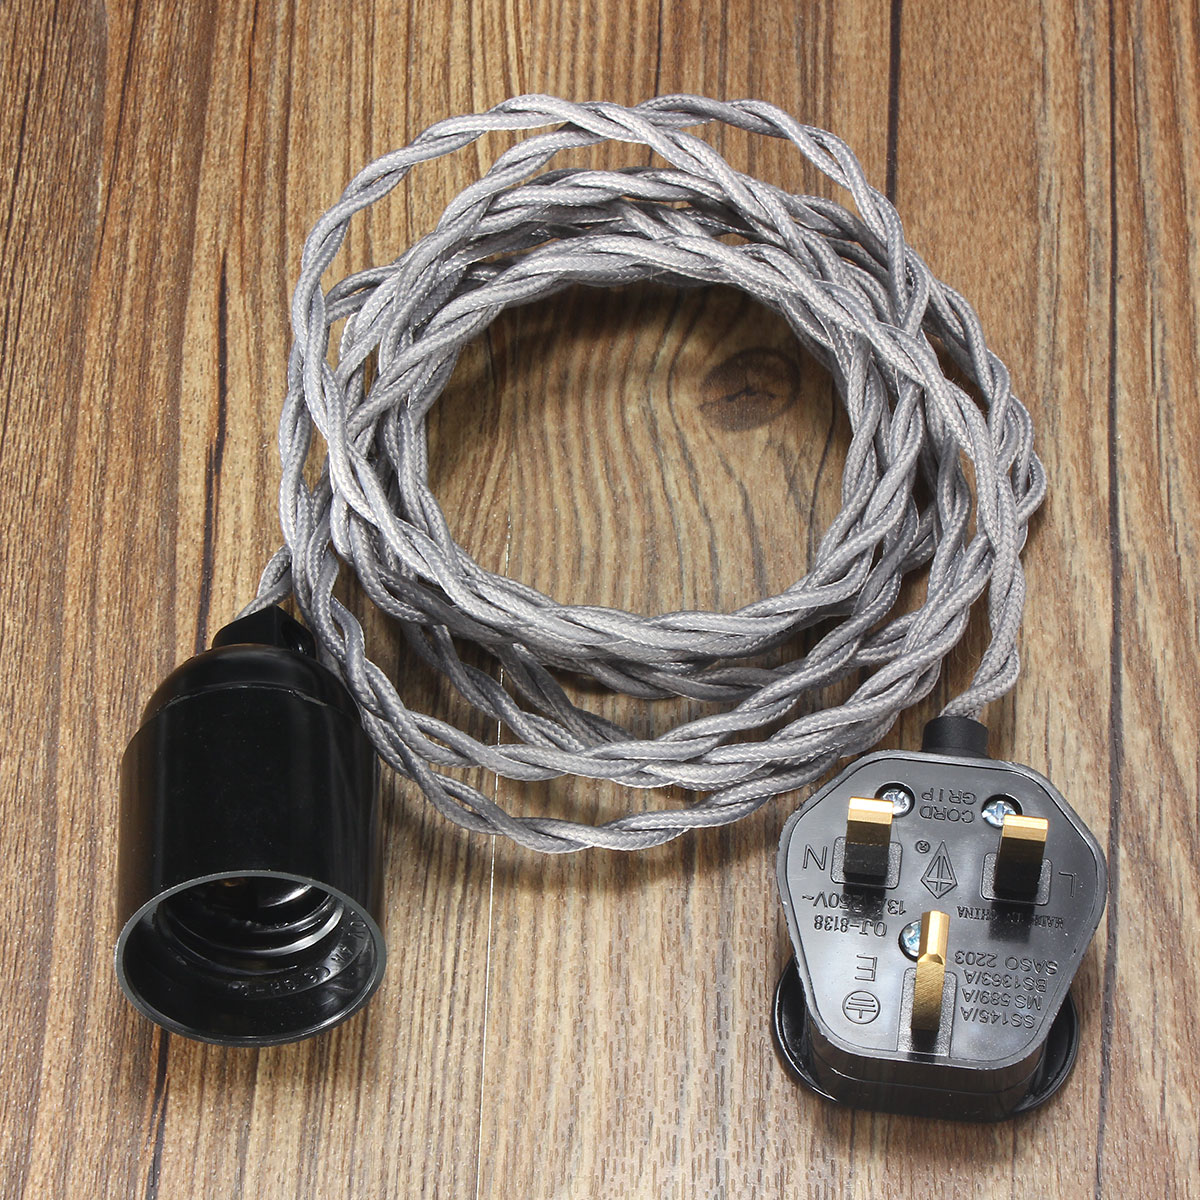 3M-E27-Vintage-Twisted-Fabric-Cable-UK-Plug-In-Pendant-Lamp-Light-Bulb-Holder-Socket-1068749-8